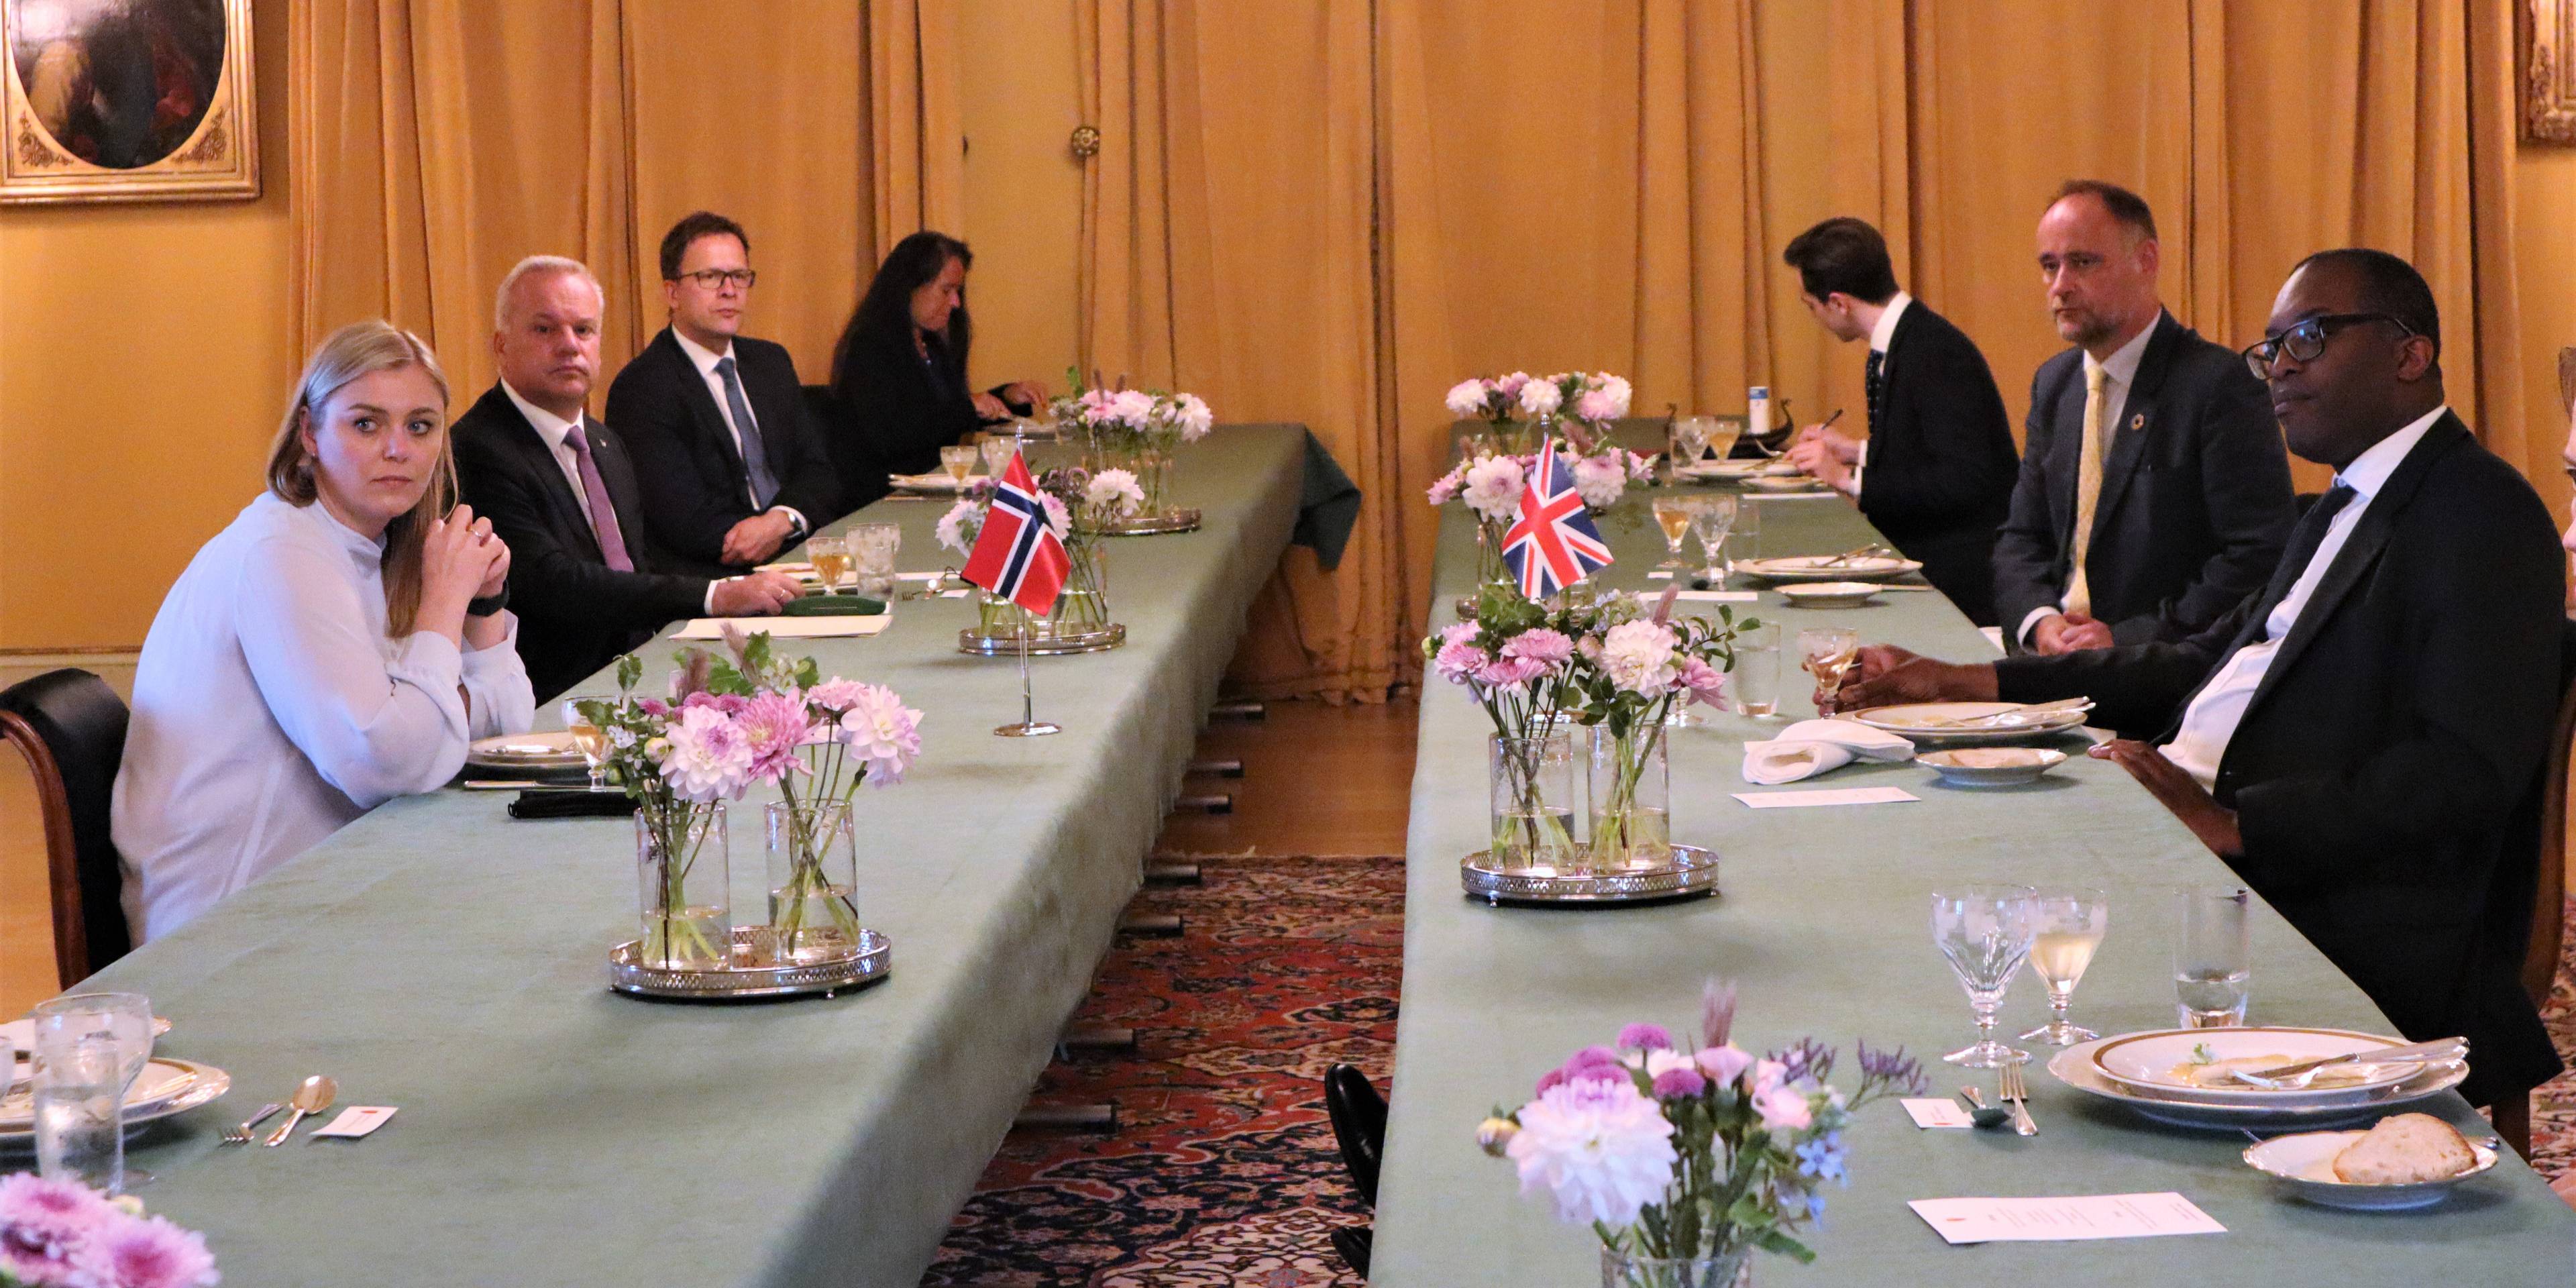 Group photo around table - Equinor meeting UK Energy Secretary Kwasi Kwarteng and Norway’s Energy Minister Tina Bru